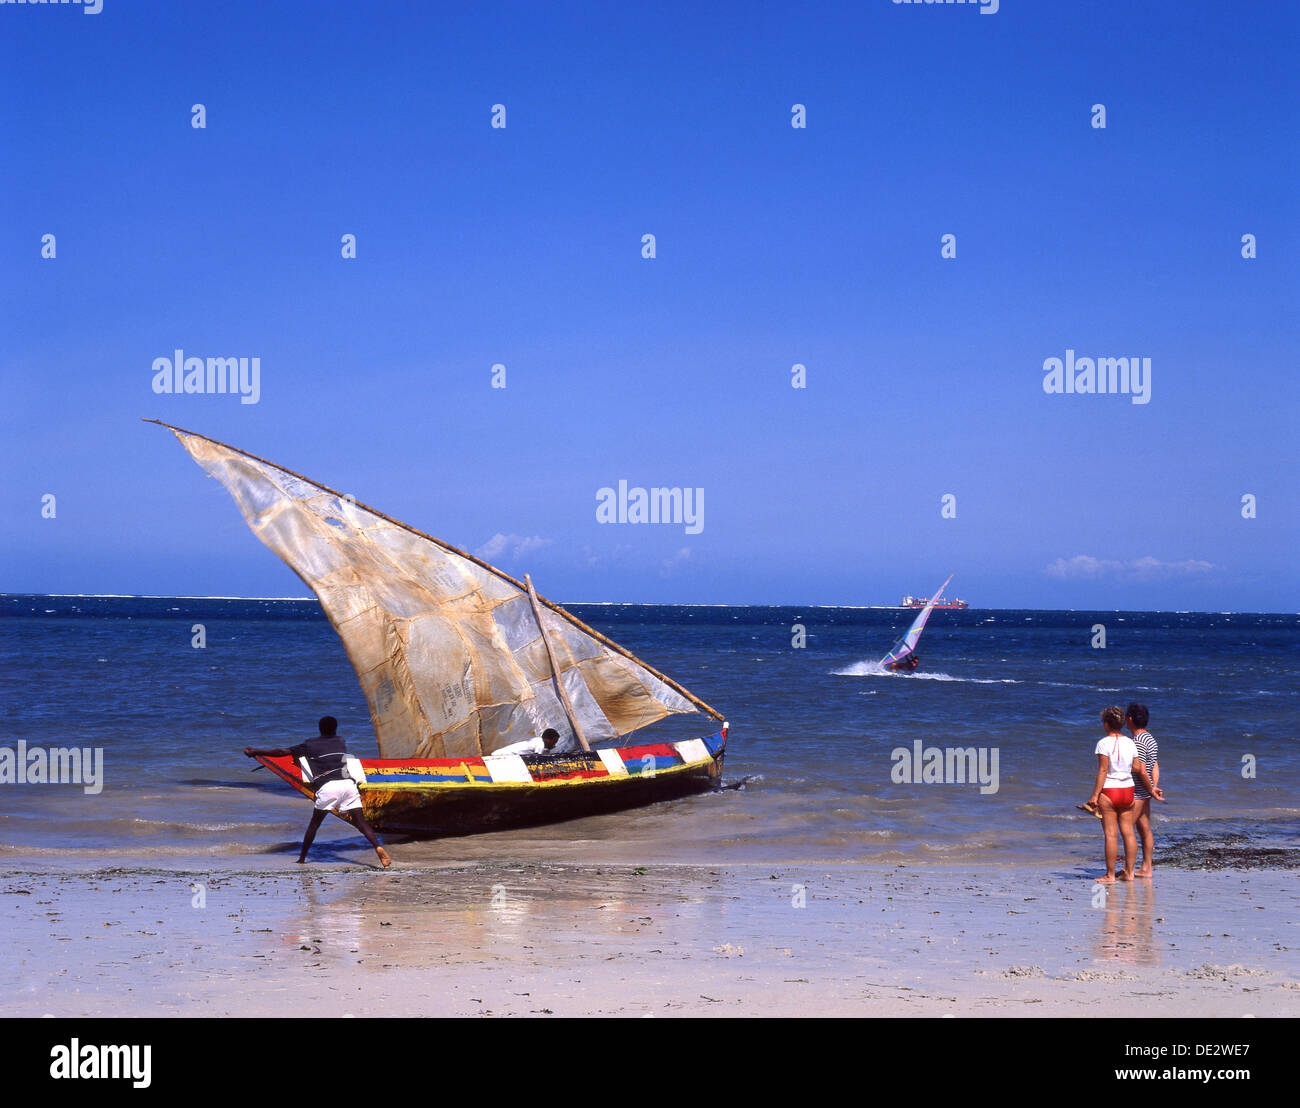 Colourful dugout sailing boat, Mombasa, Mombasa County, Republic of Kenya Stock Photo